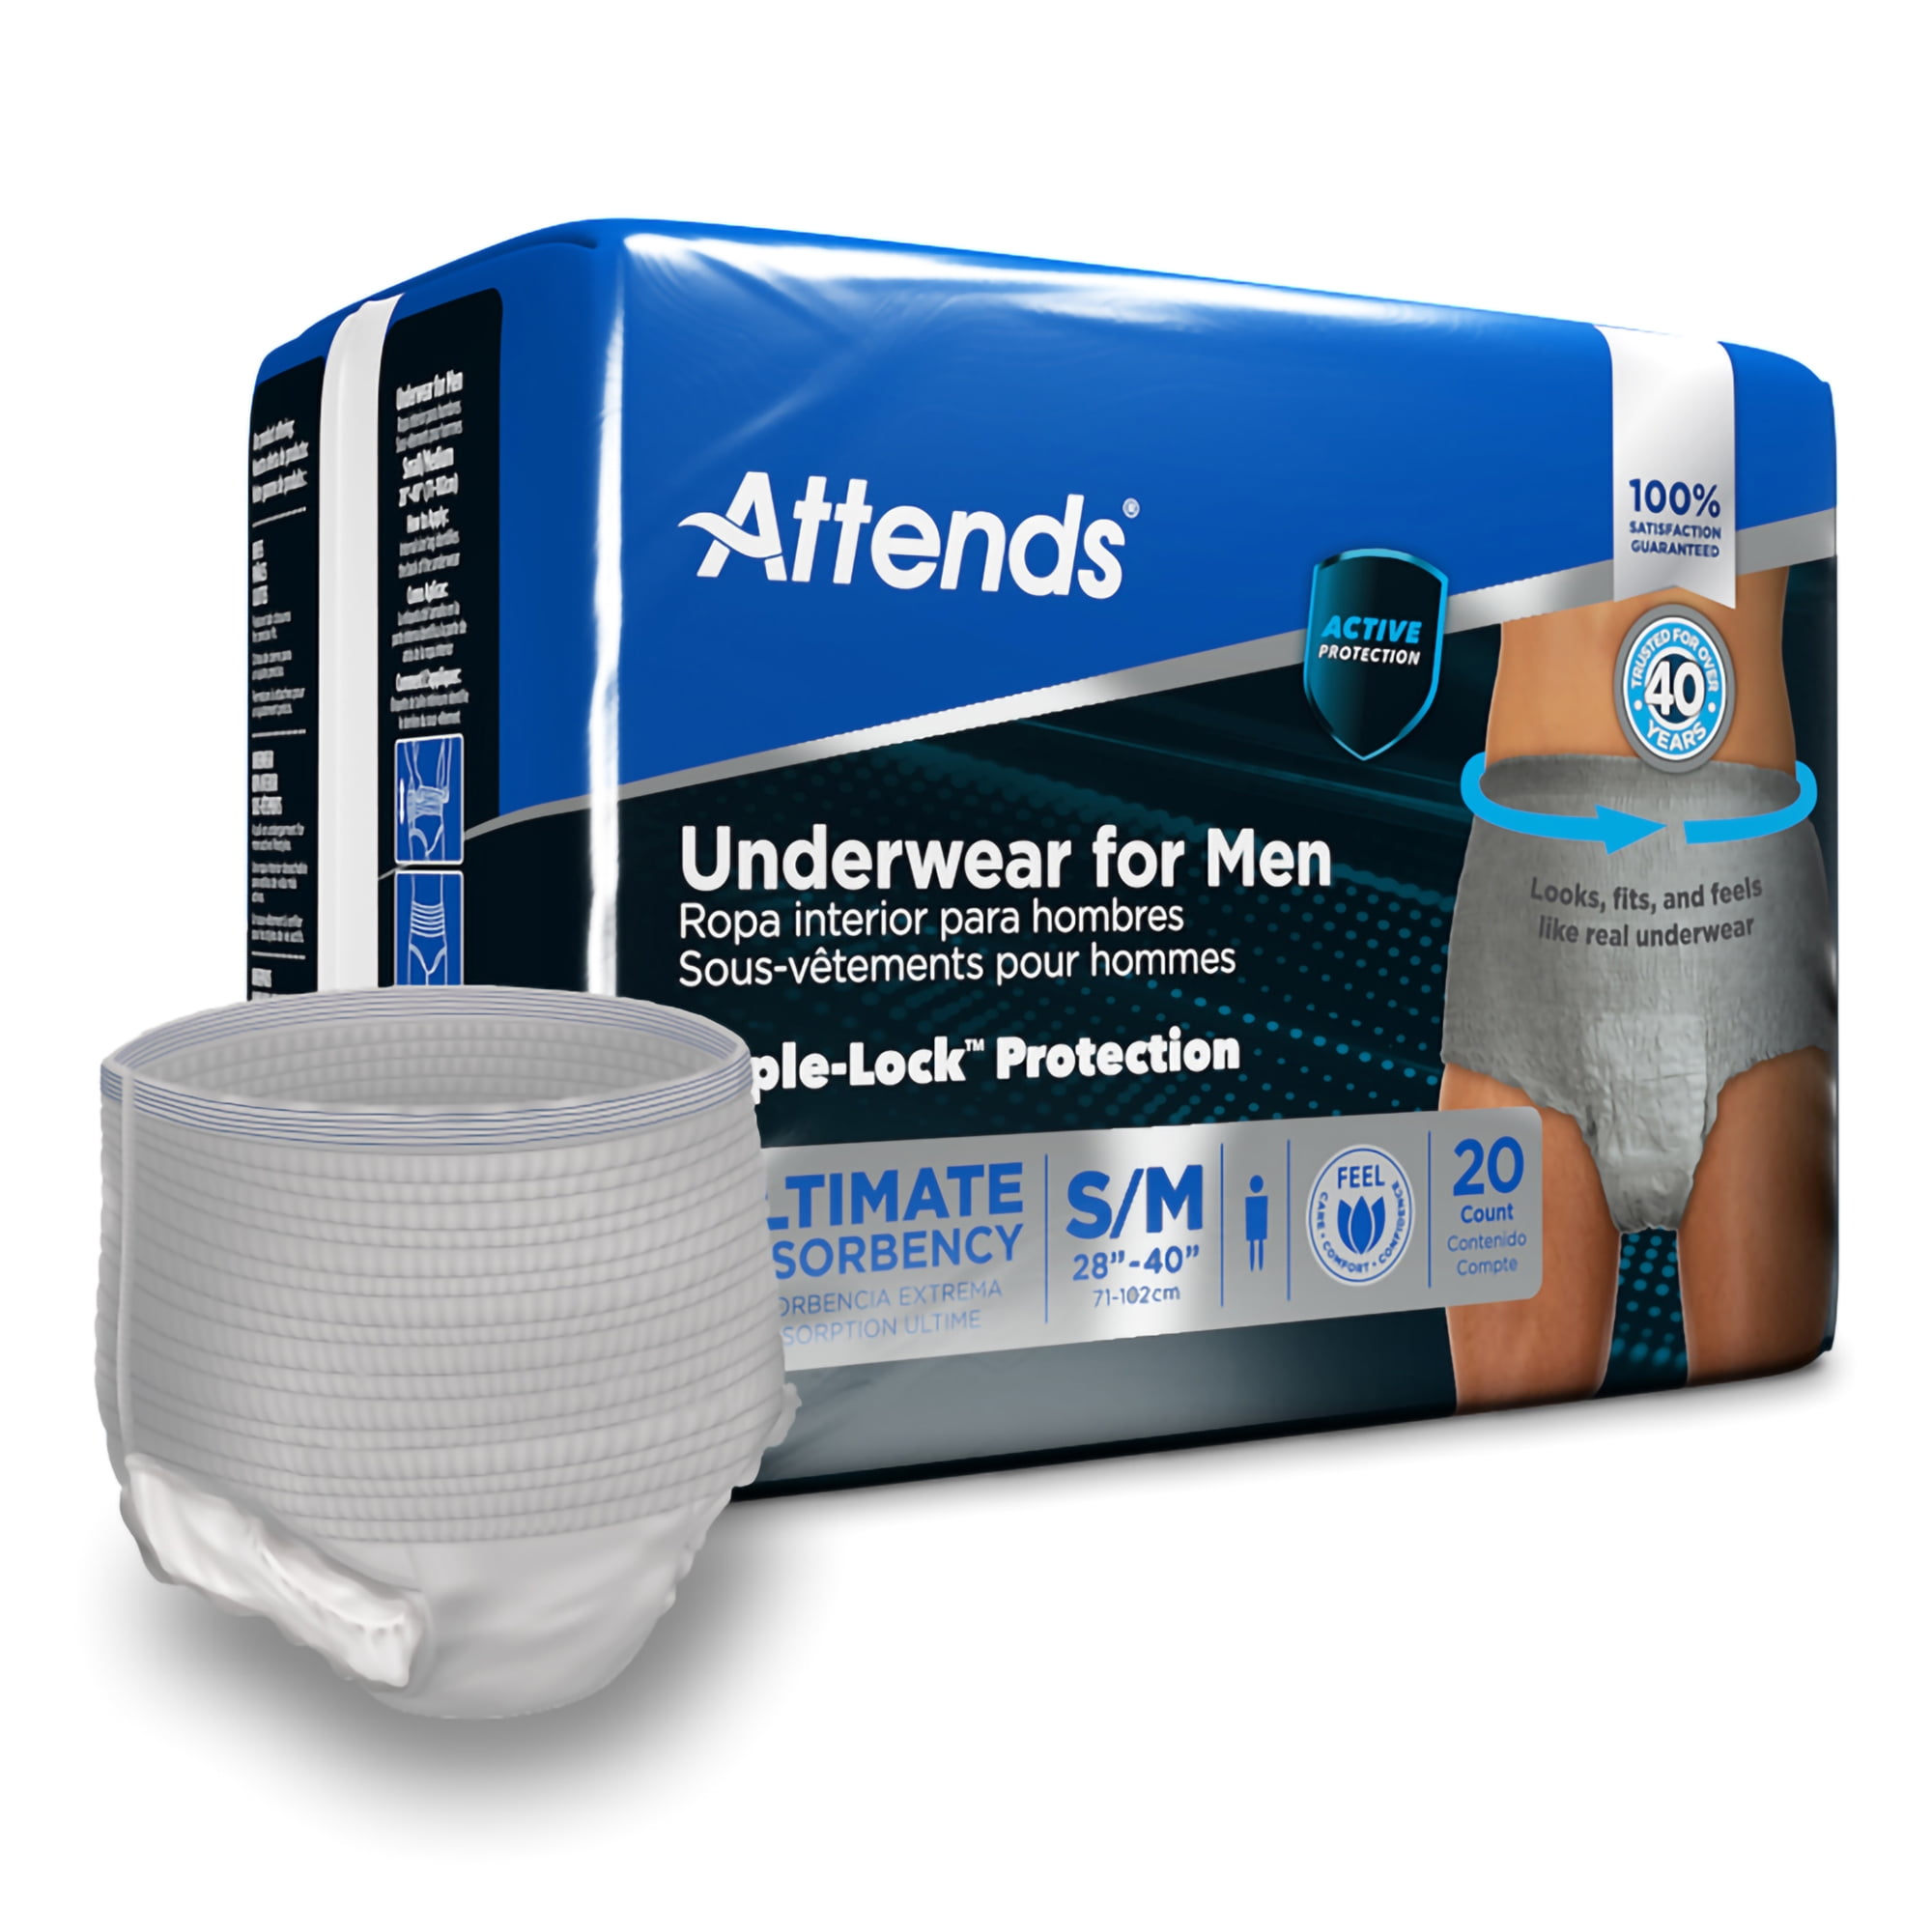 Men's Underwear Tab